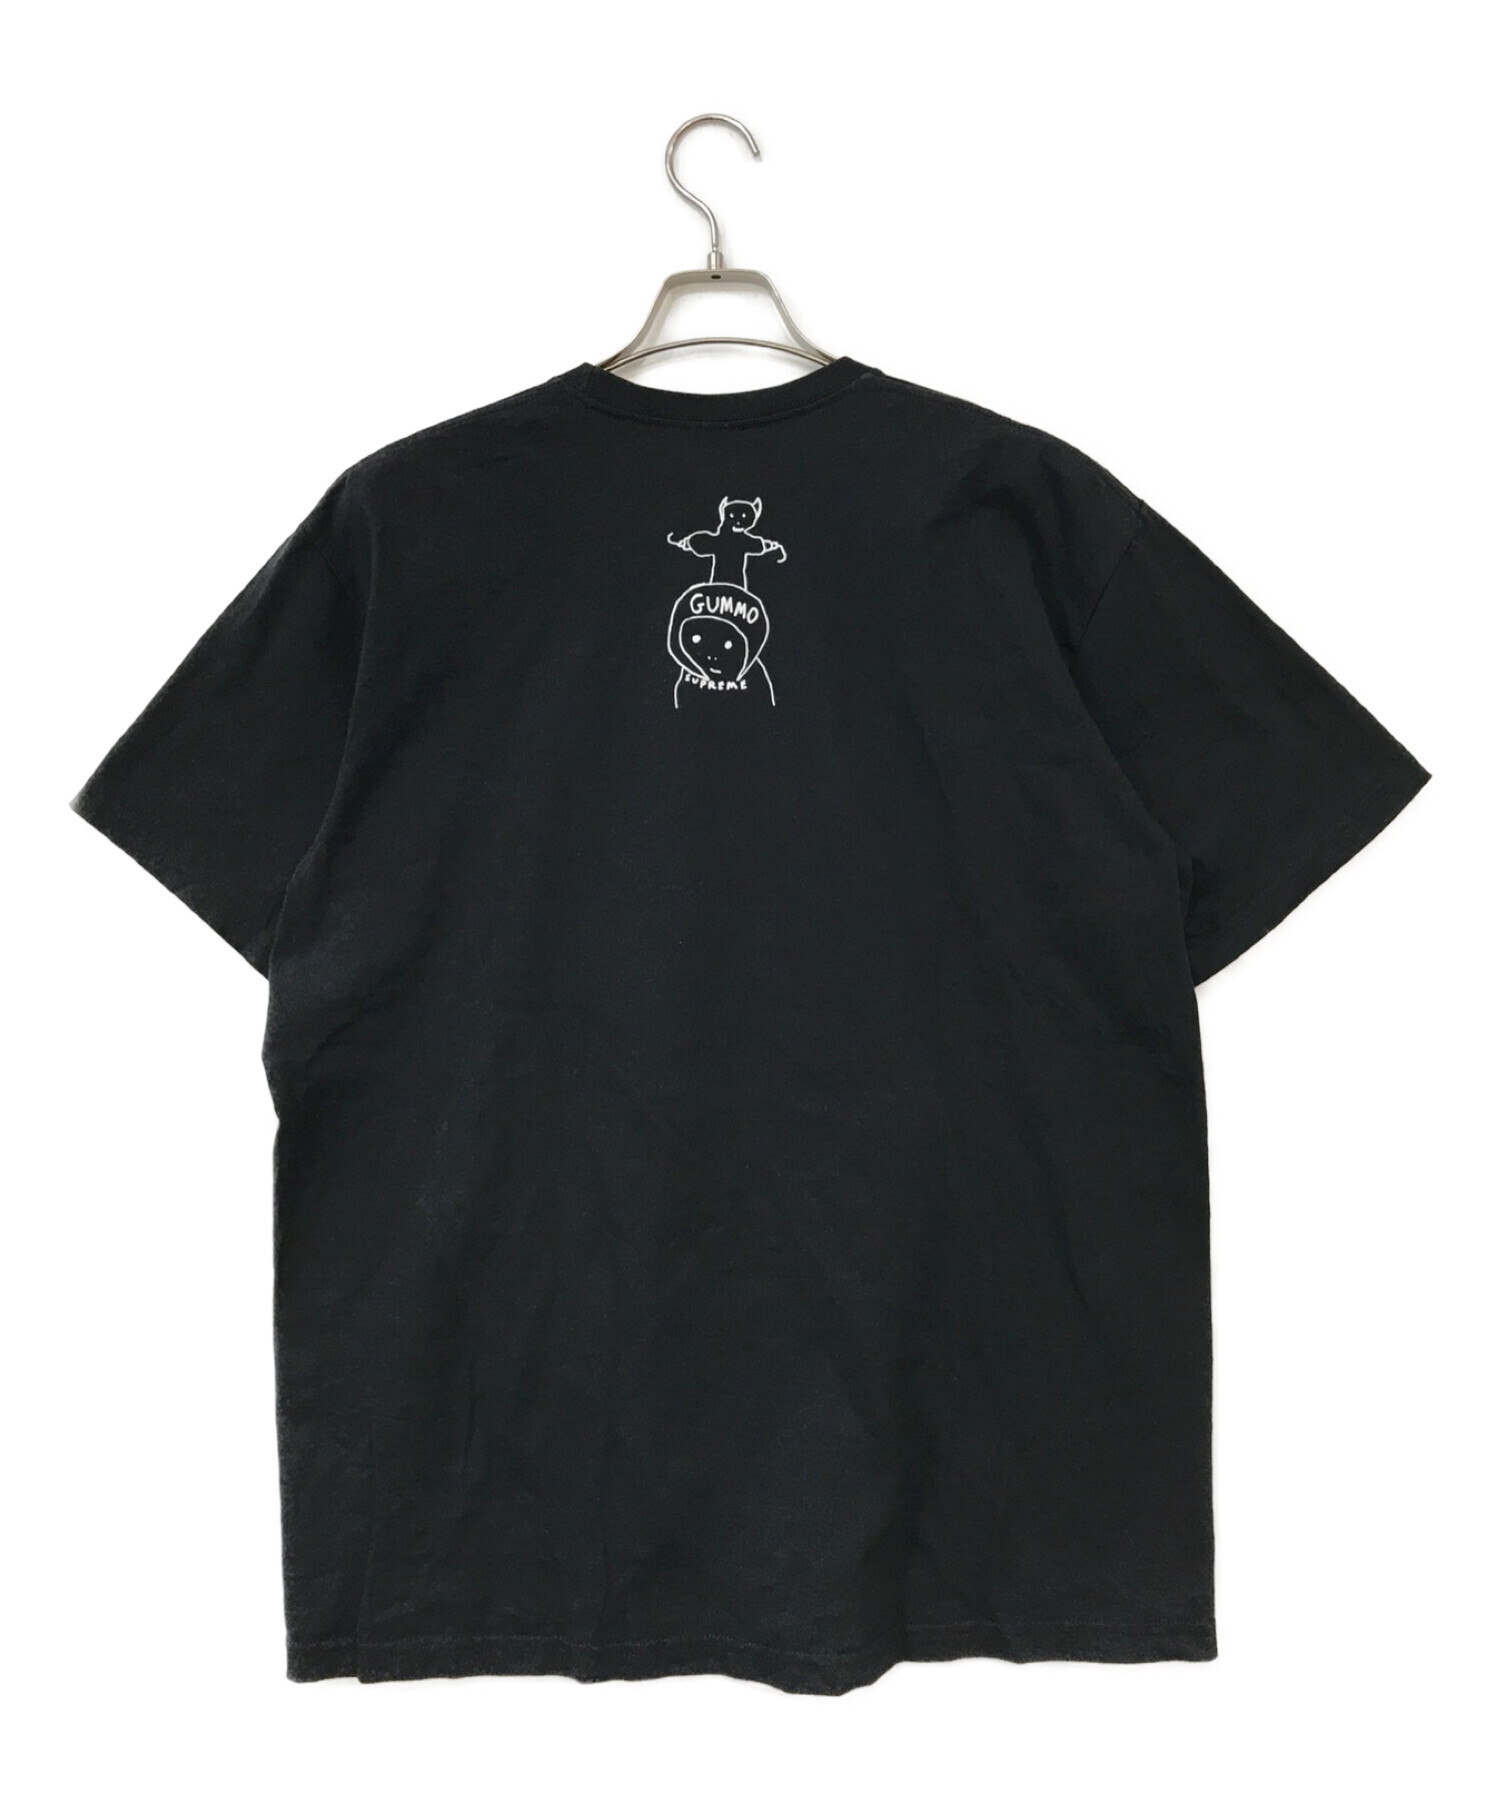 SUPREME (シュプリーム) Gummo Bathtub Tee/ガンモバスタブTシャツ ブラック サイズ:L